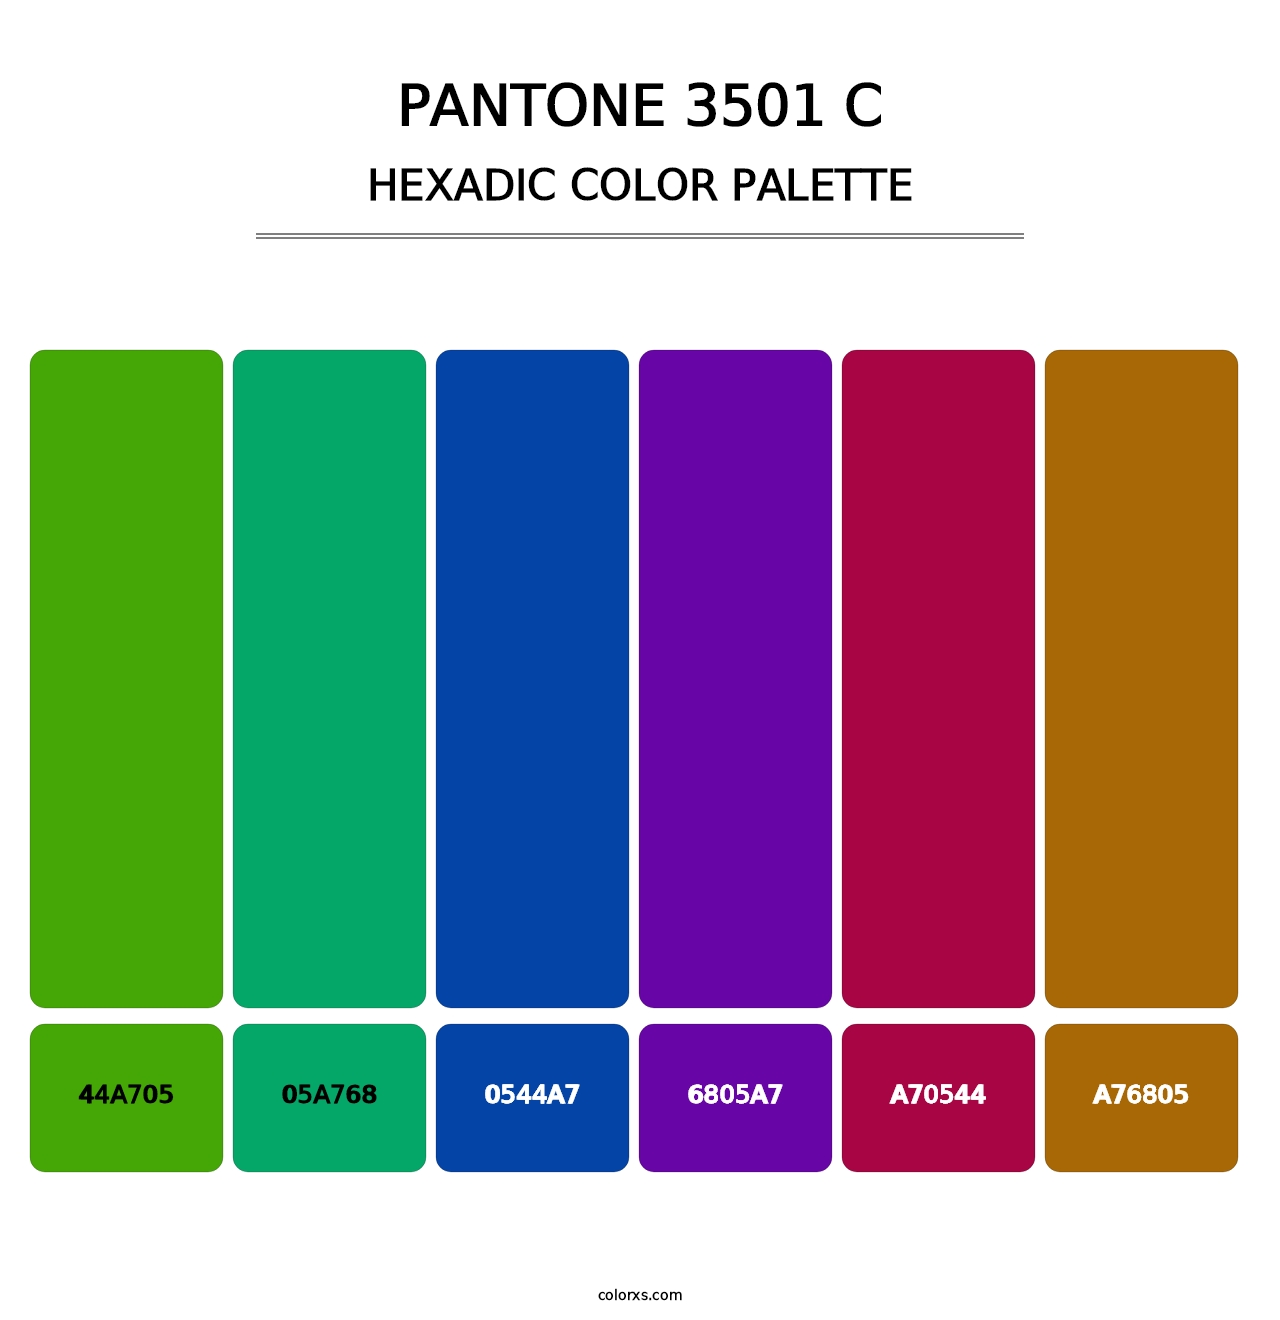 PANTONE 3501 C - Hexadic Color Palette